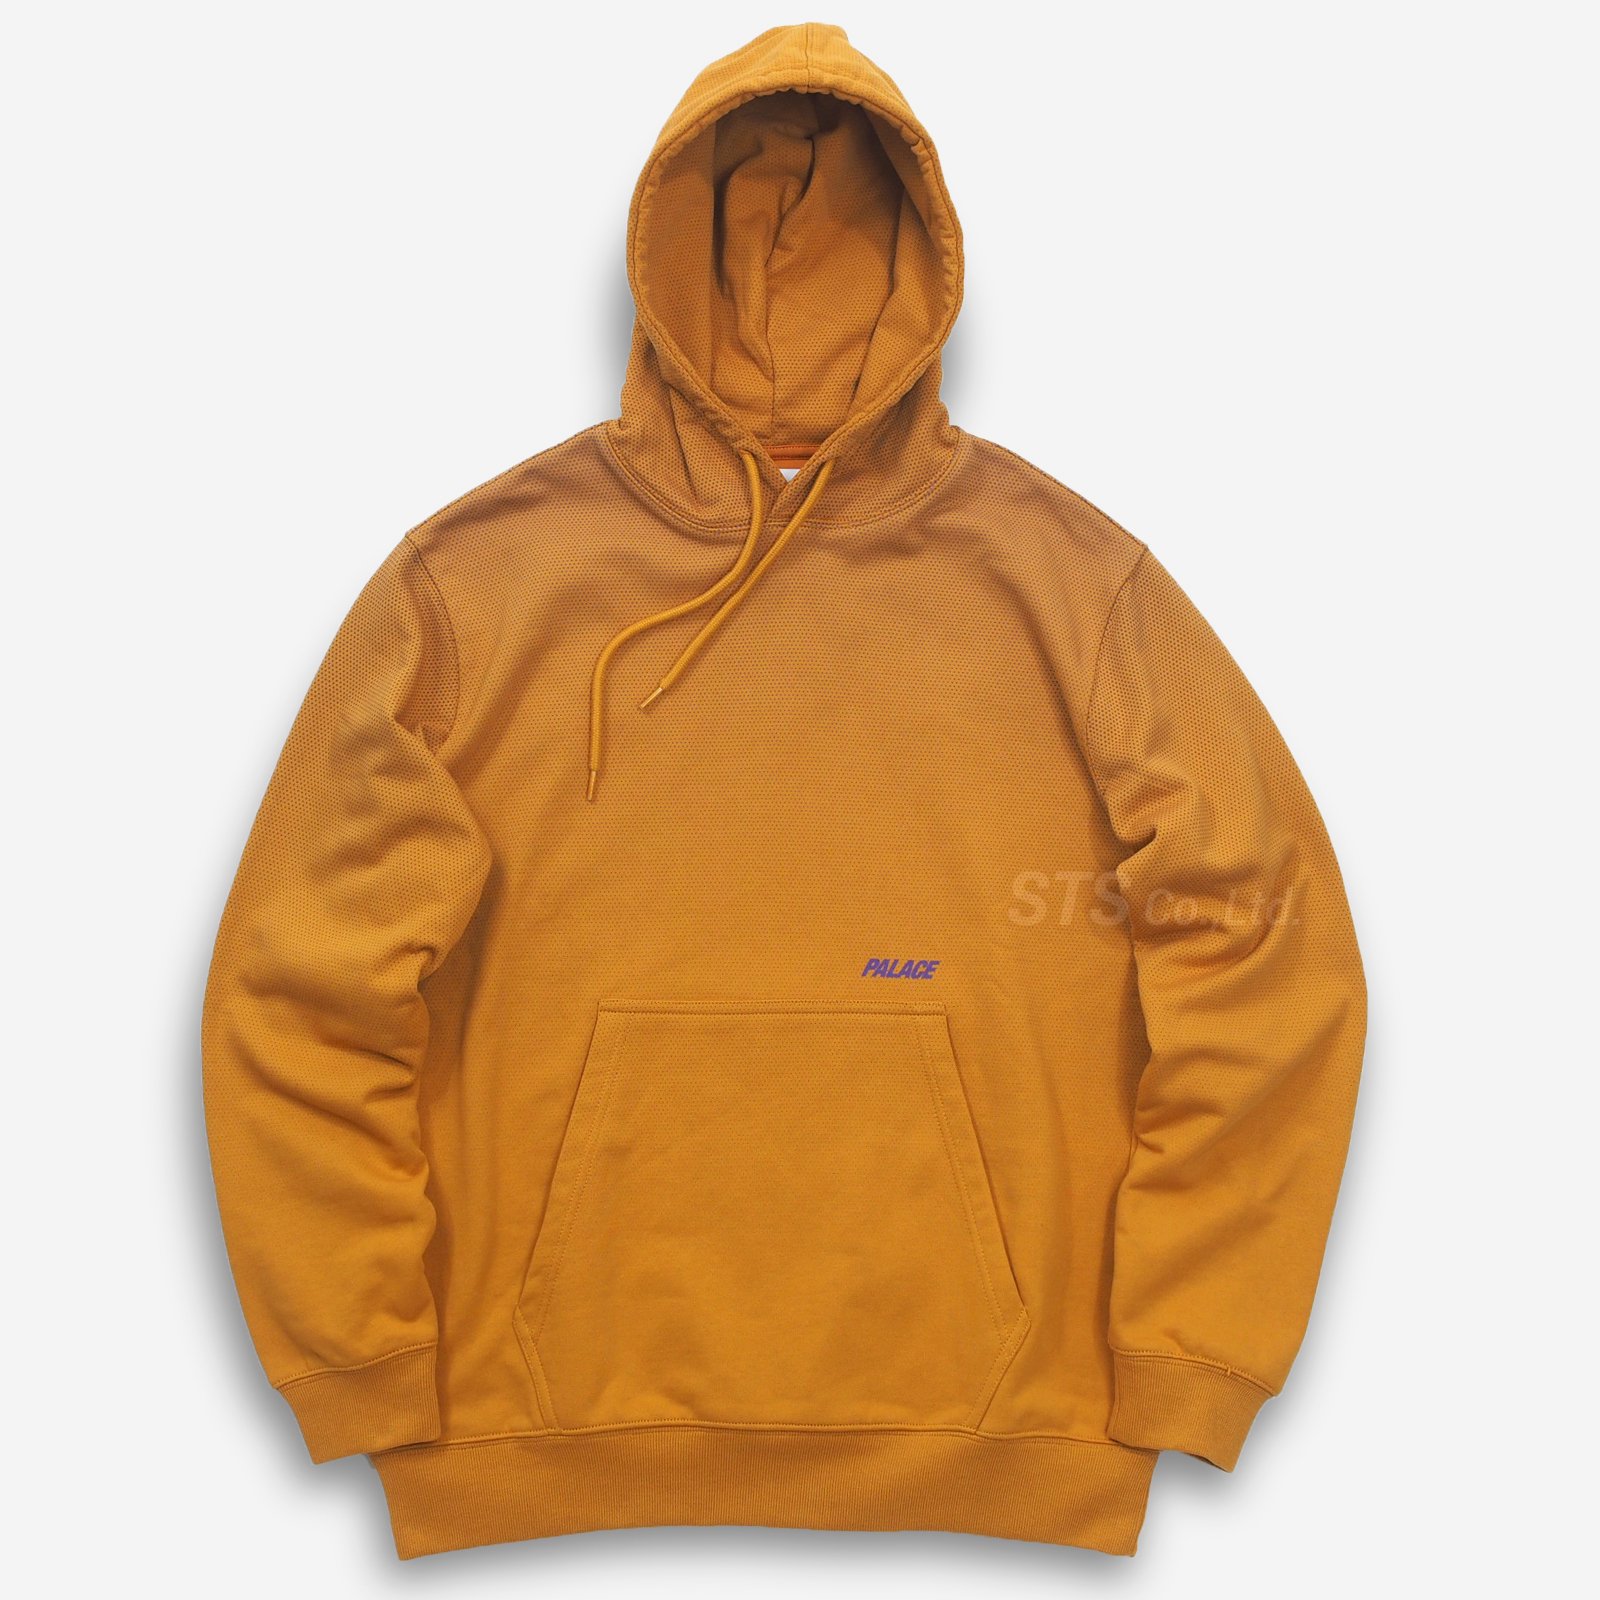 palace hoodie orange